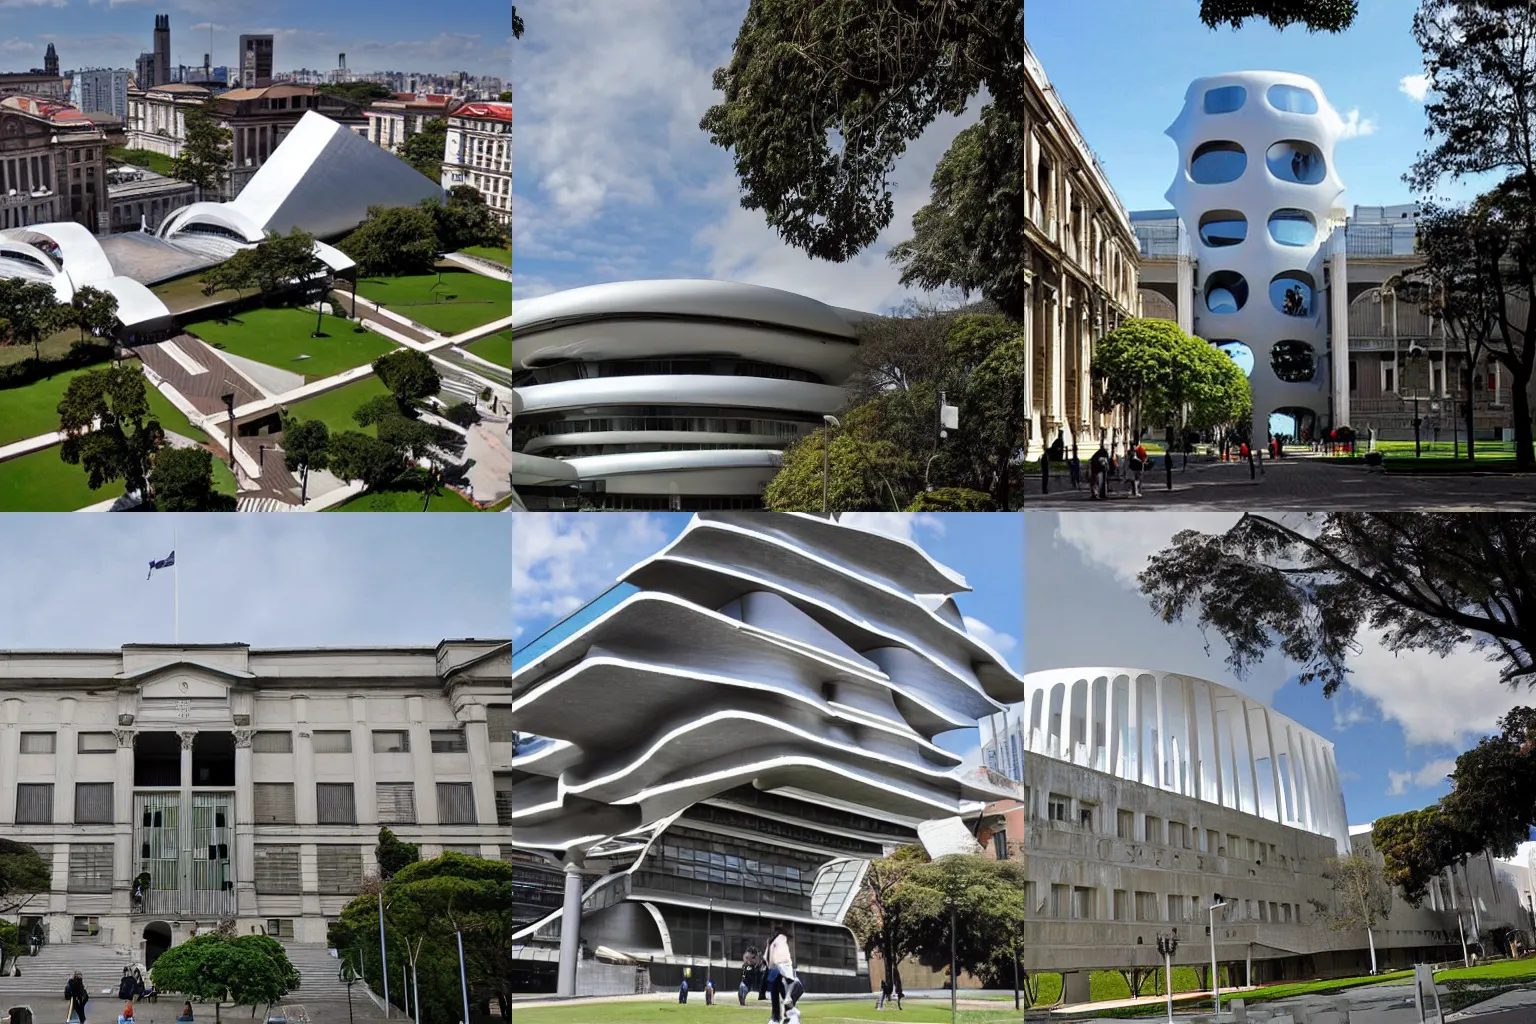 Prompt: Universidad de Buenos Aires with a futuristic architecture